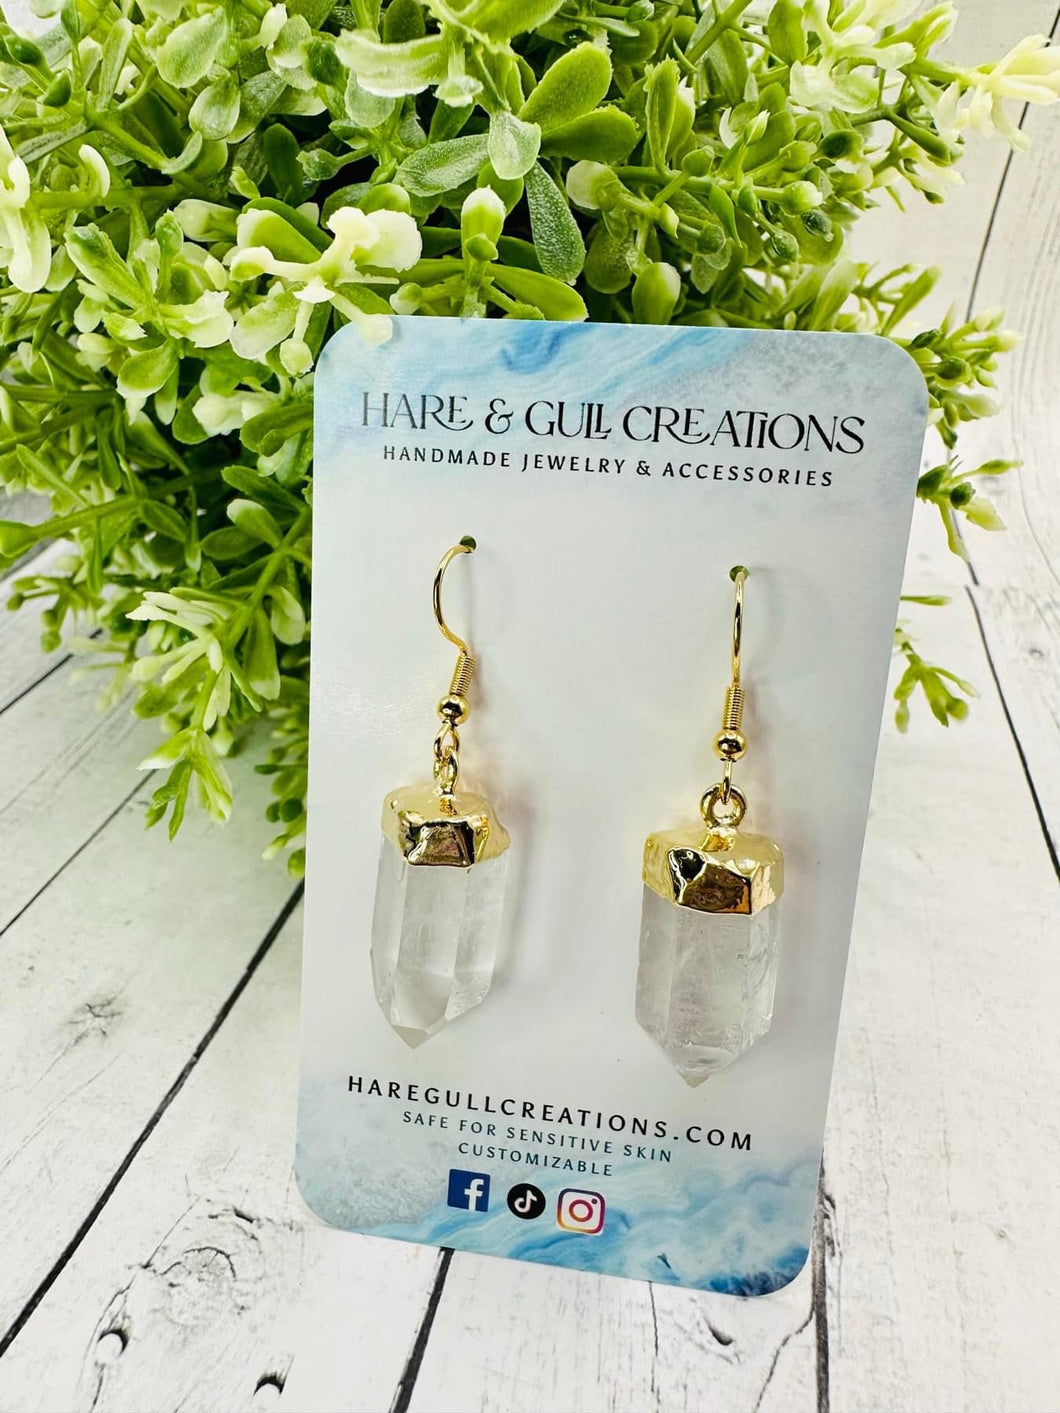 Quartz Crystal Earrings